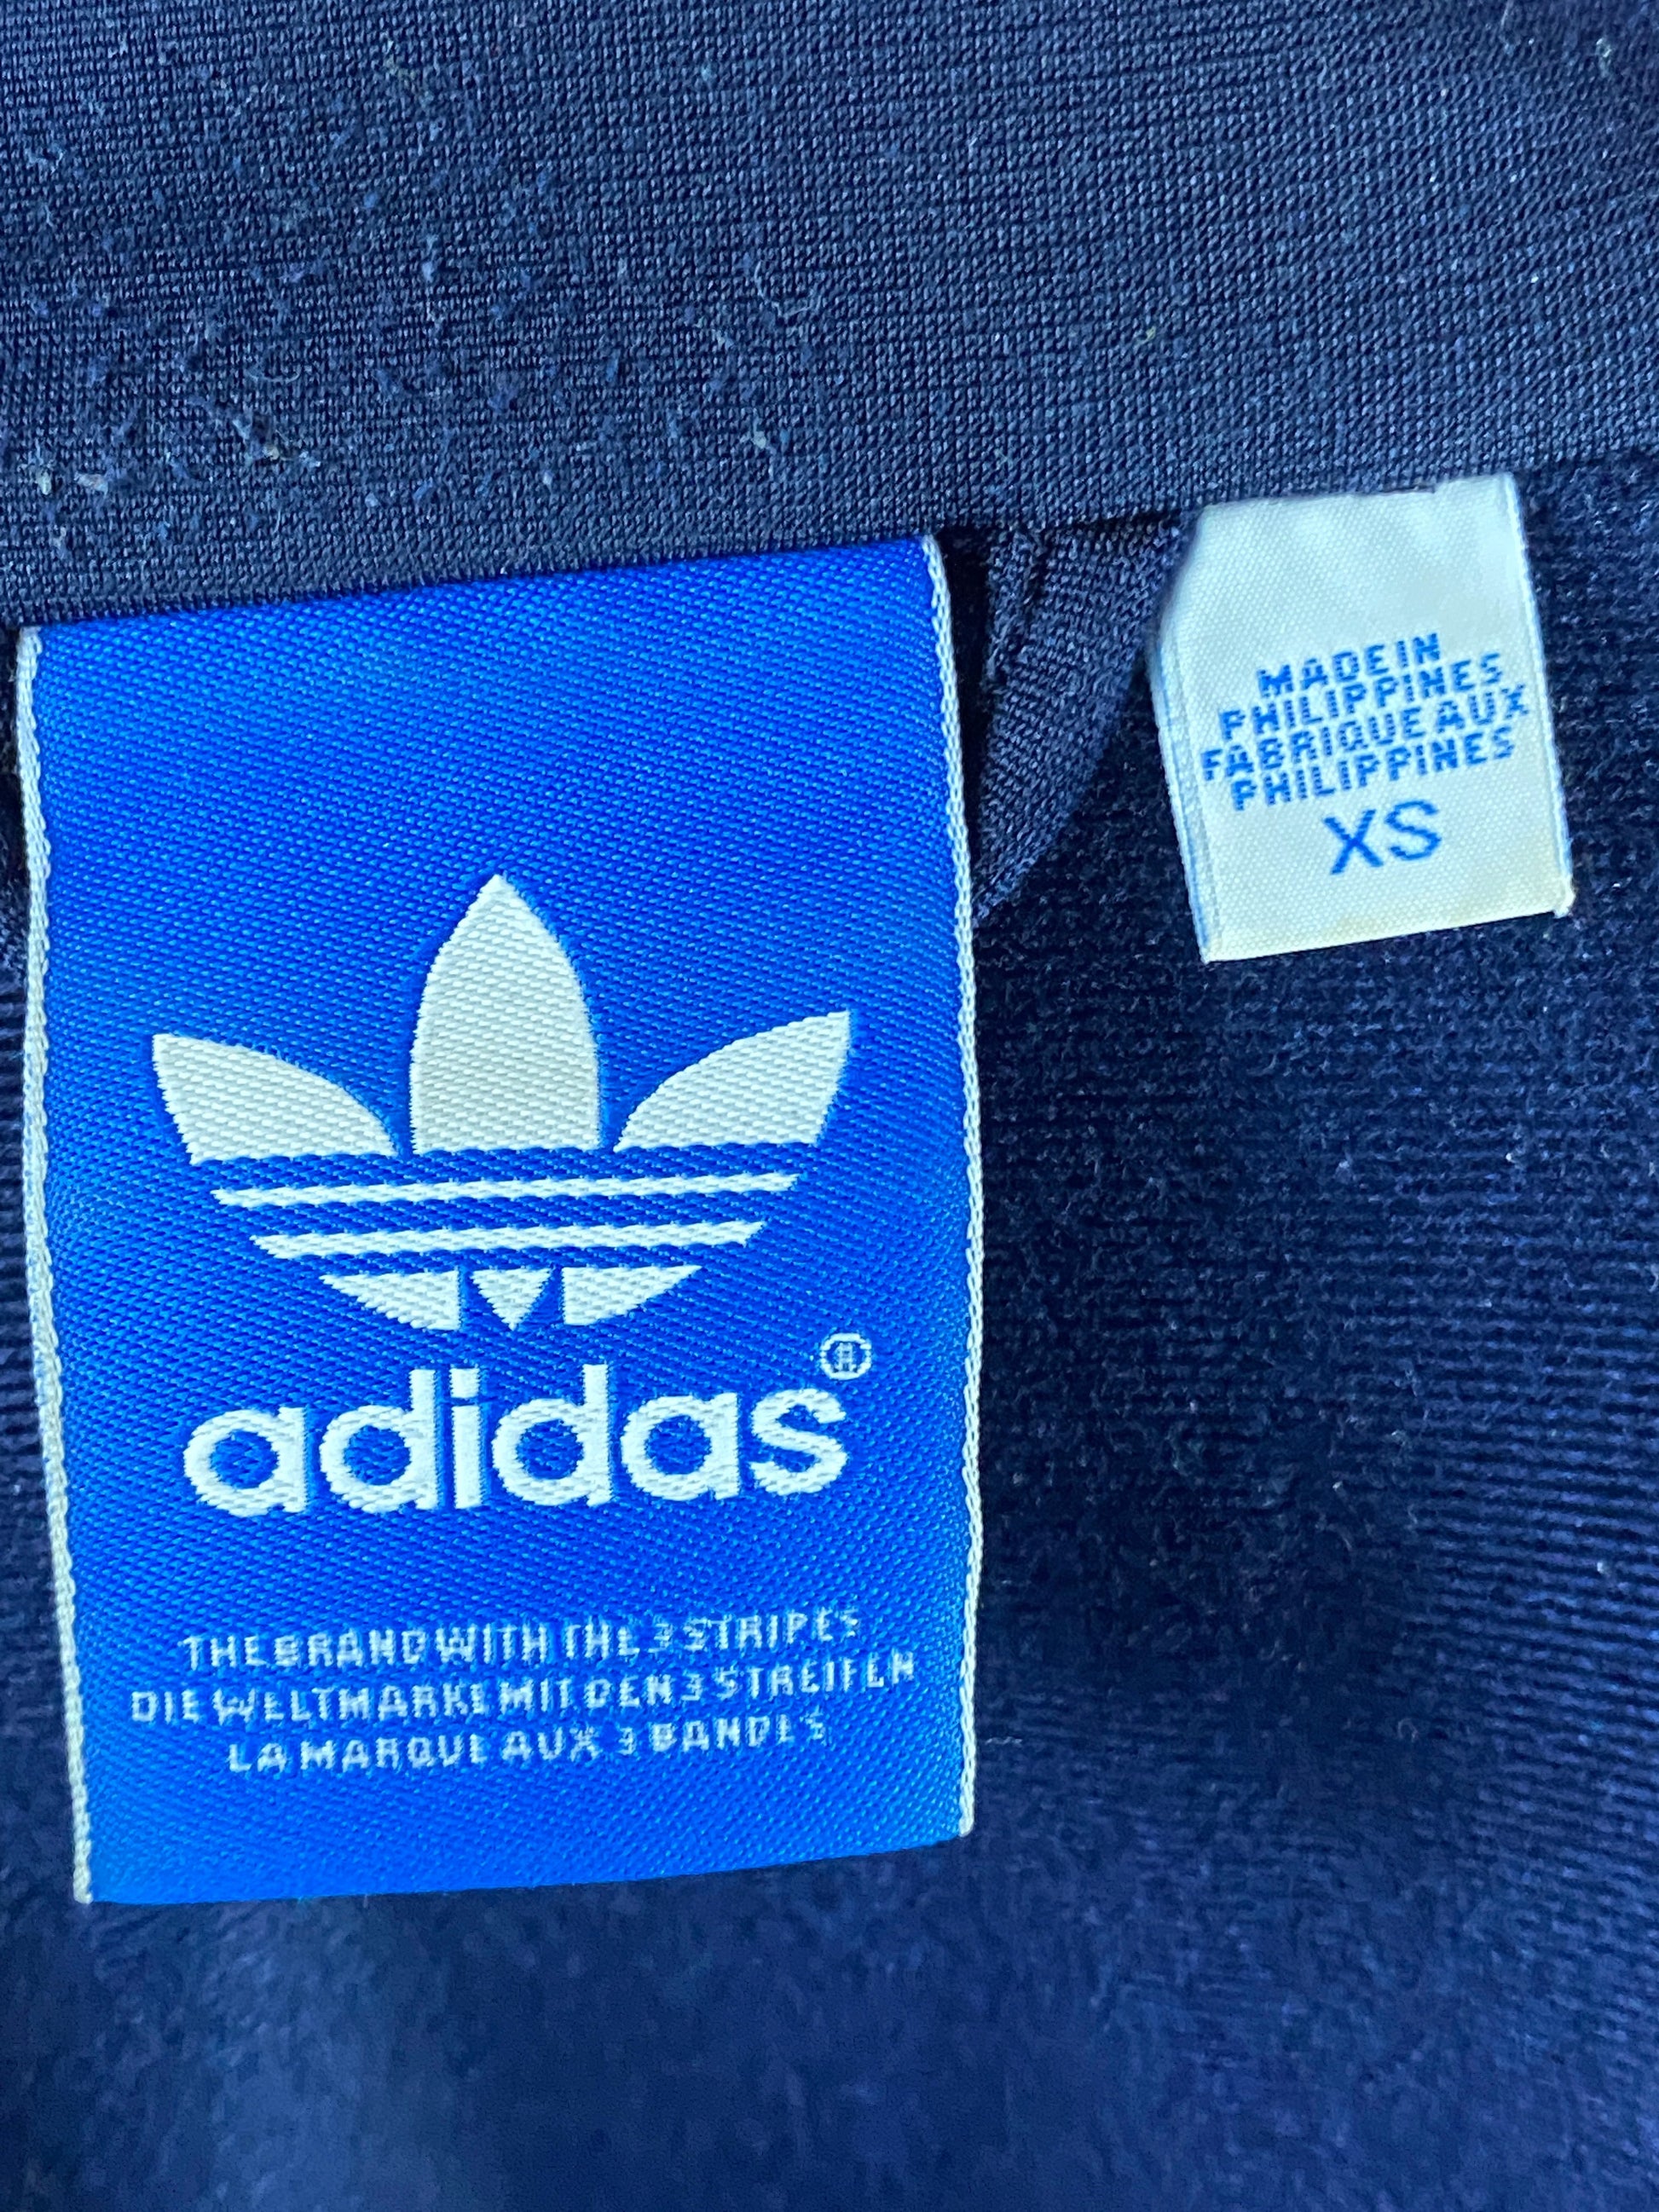 Adidas Originals Men's Track Jacket - XS Navy Blue Polyester